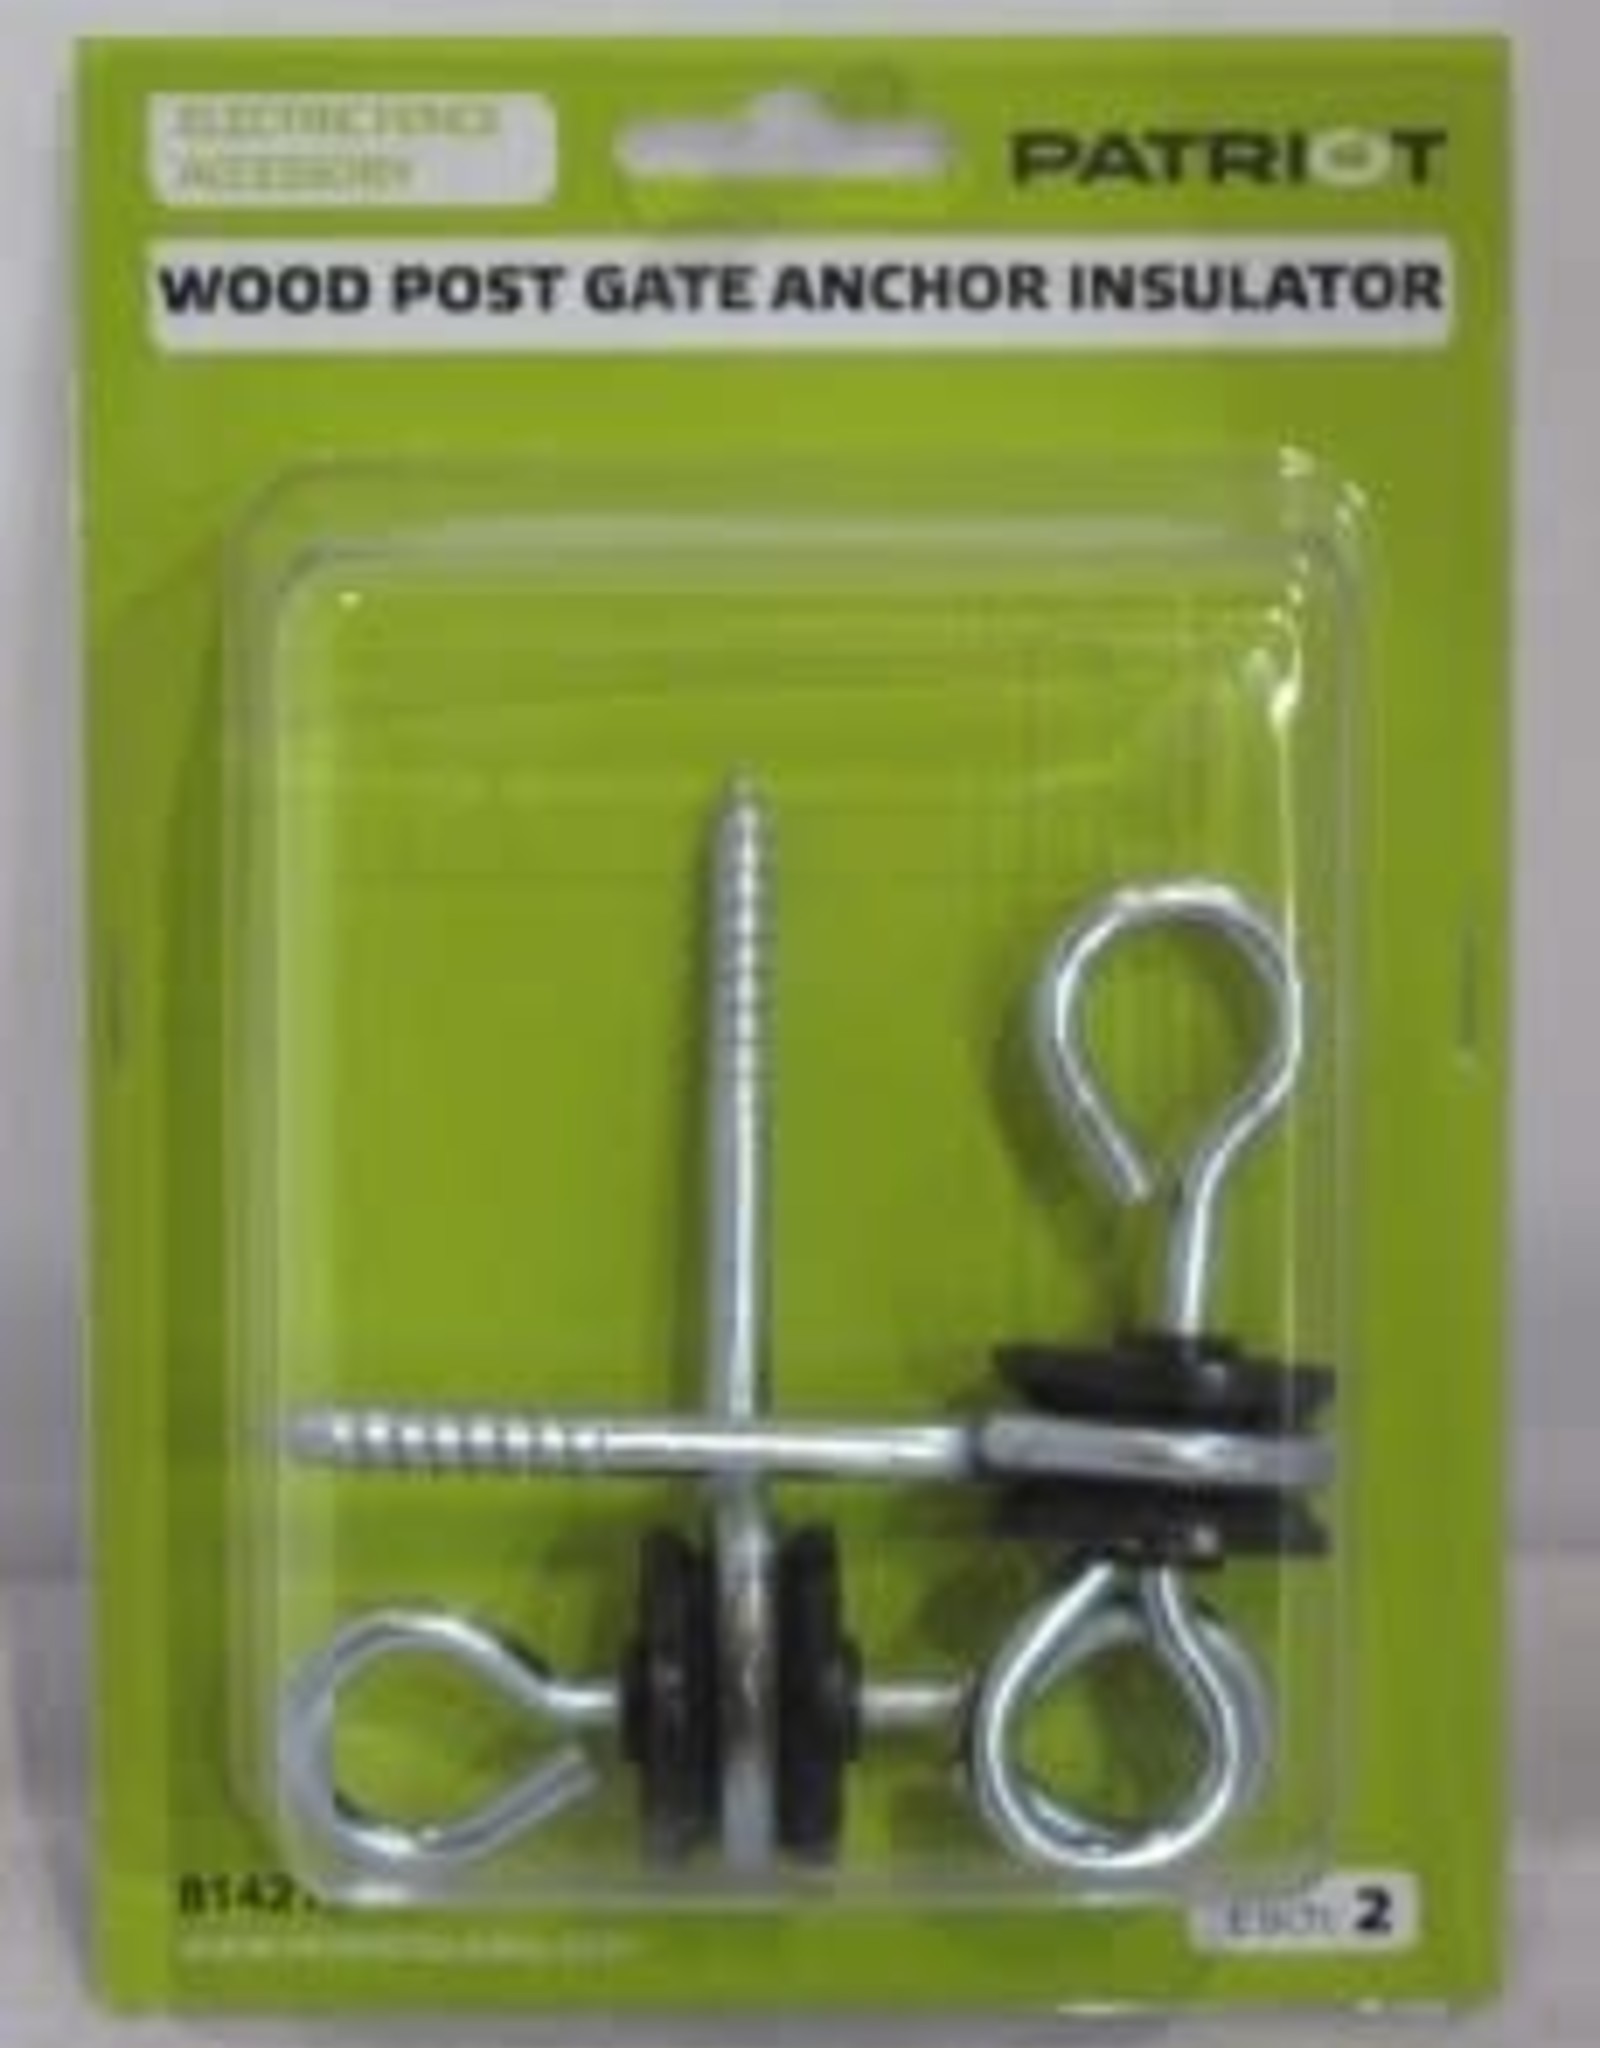 TRU-TEST Wood Post Gate Anchor insulator